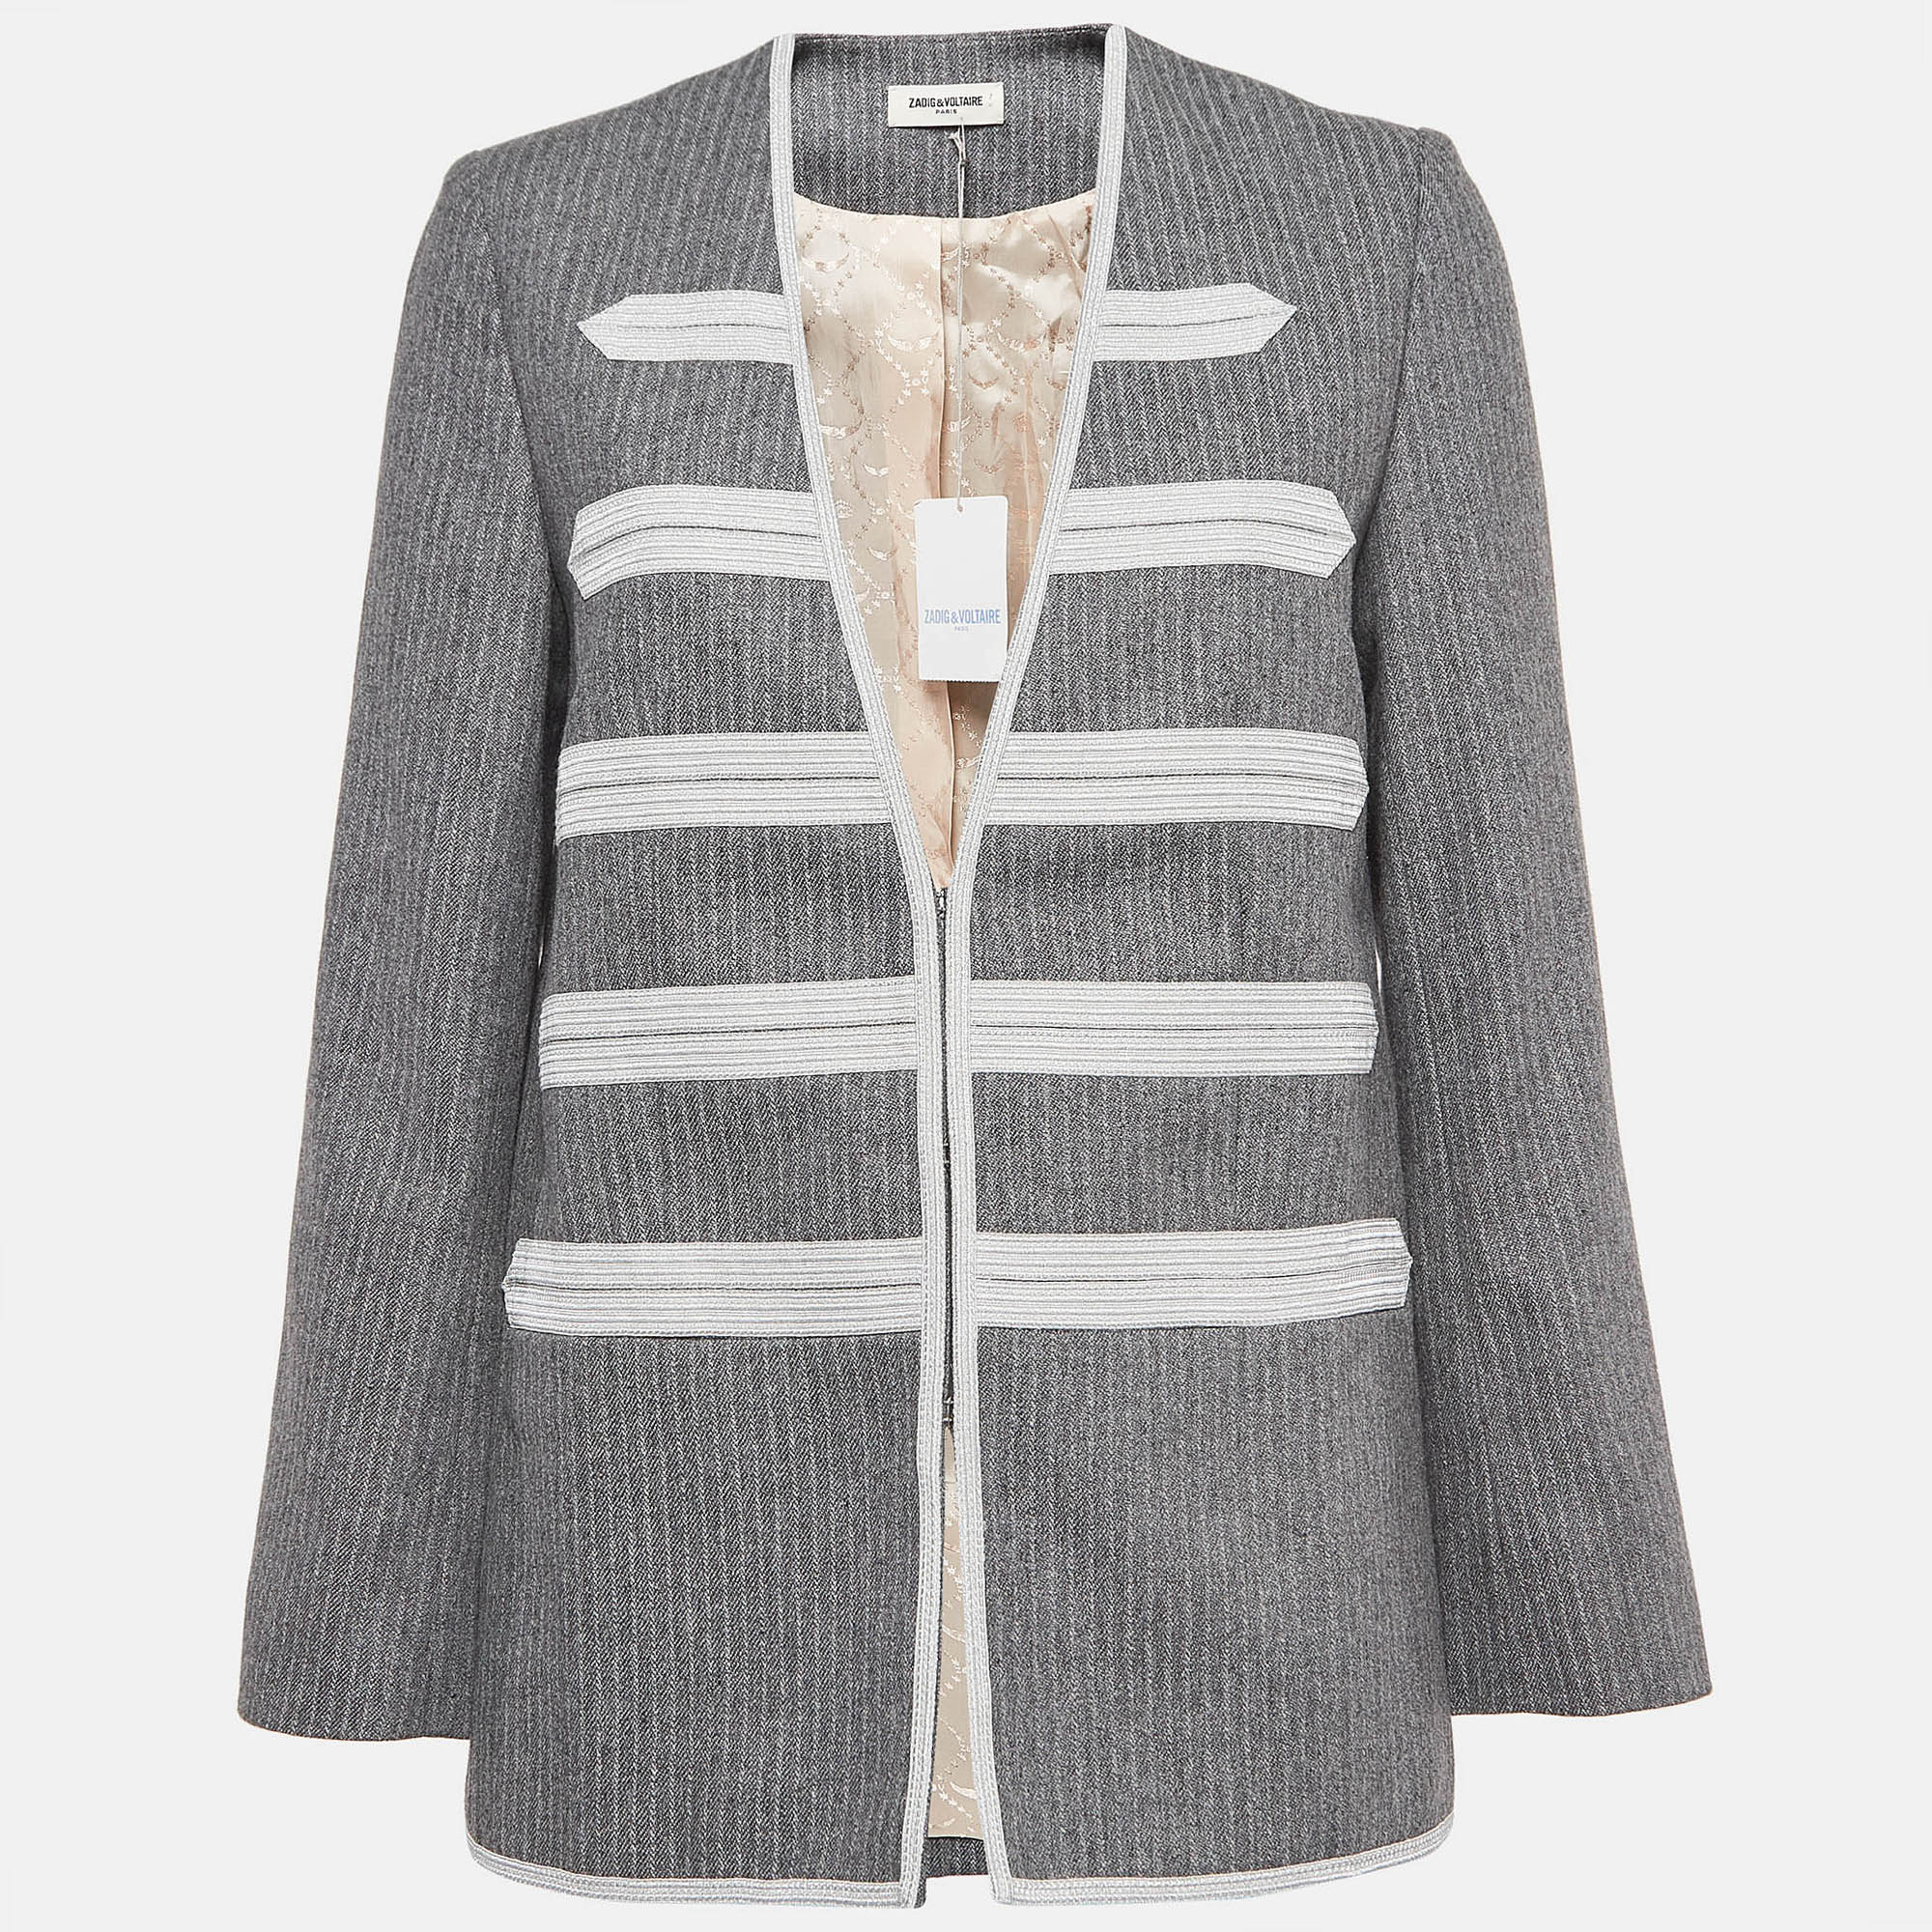 Zadig & voltaire grey patterned wool blend jacket m